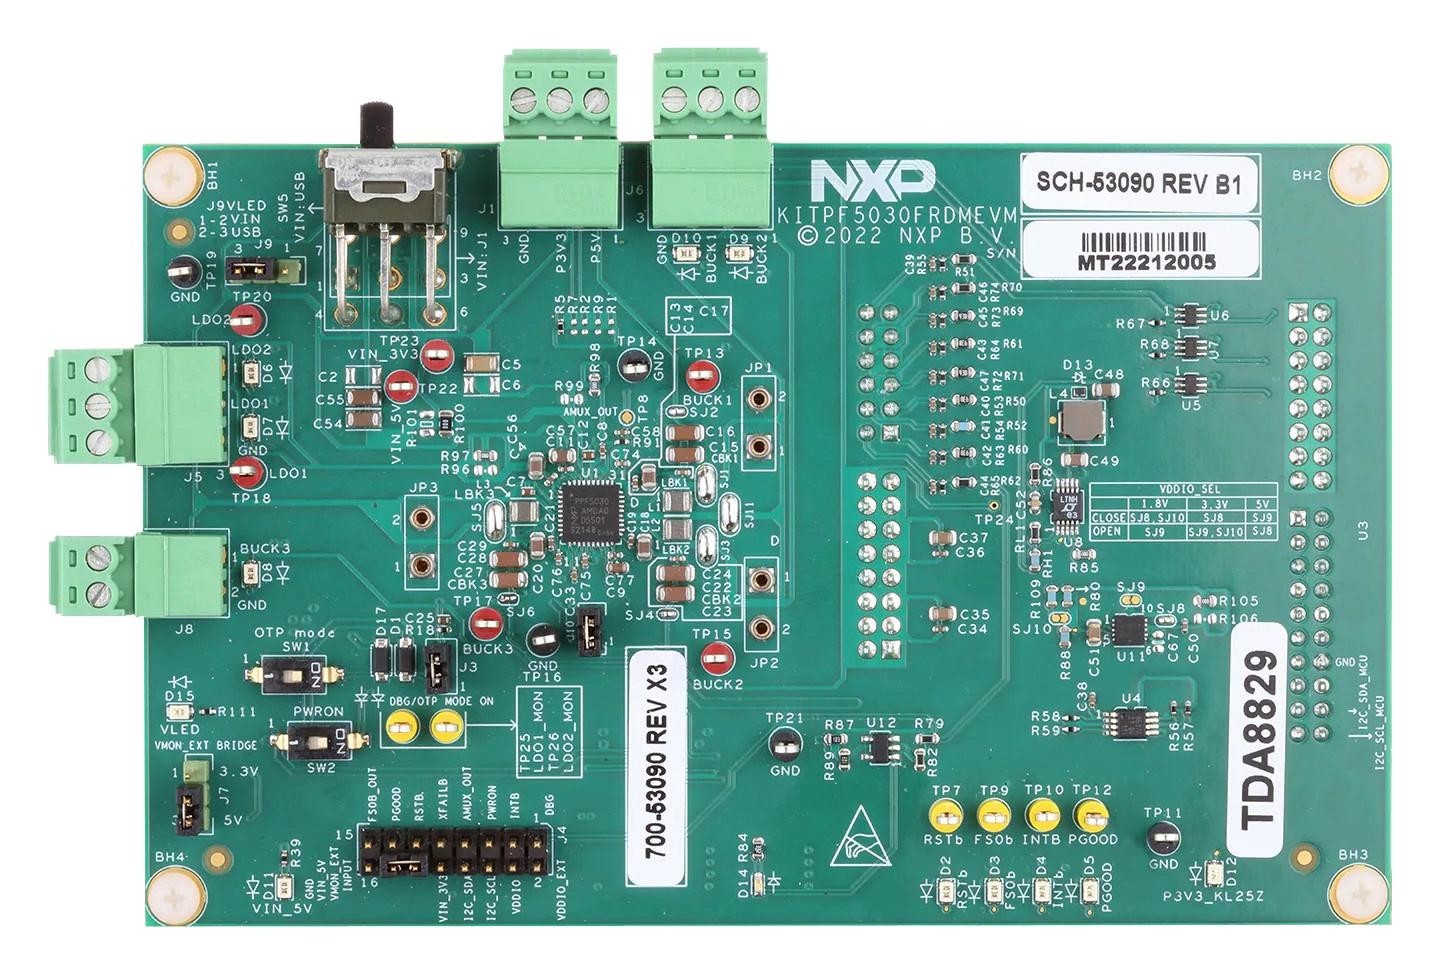 NXP Semiconductors Semiconductors Kitpf5030Frdmevm Evaluation Kit, Multi-Channel Pmic